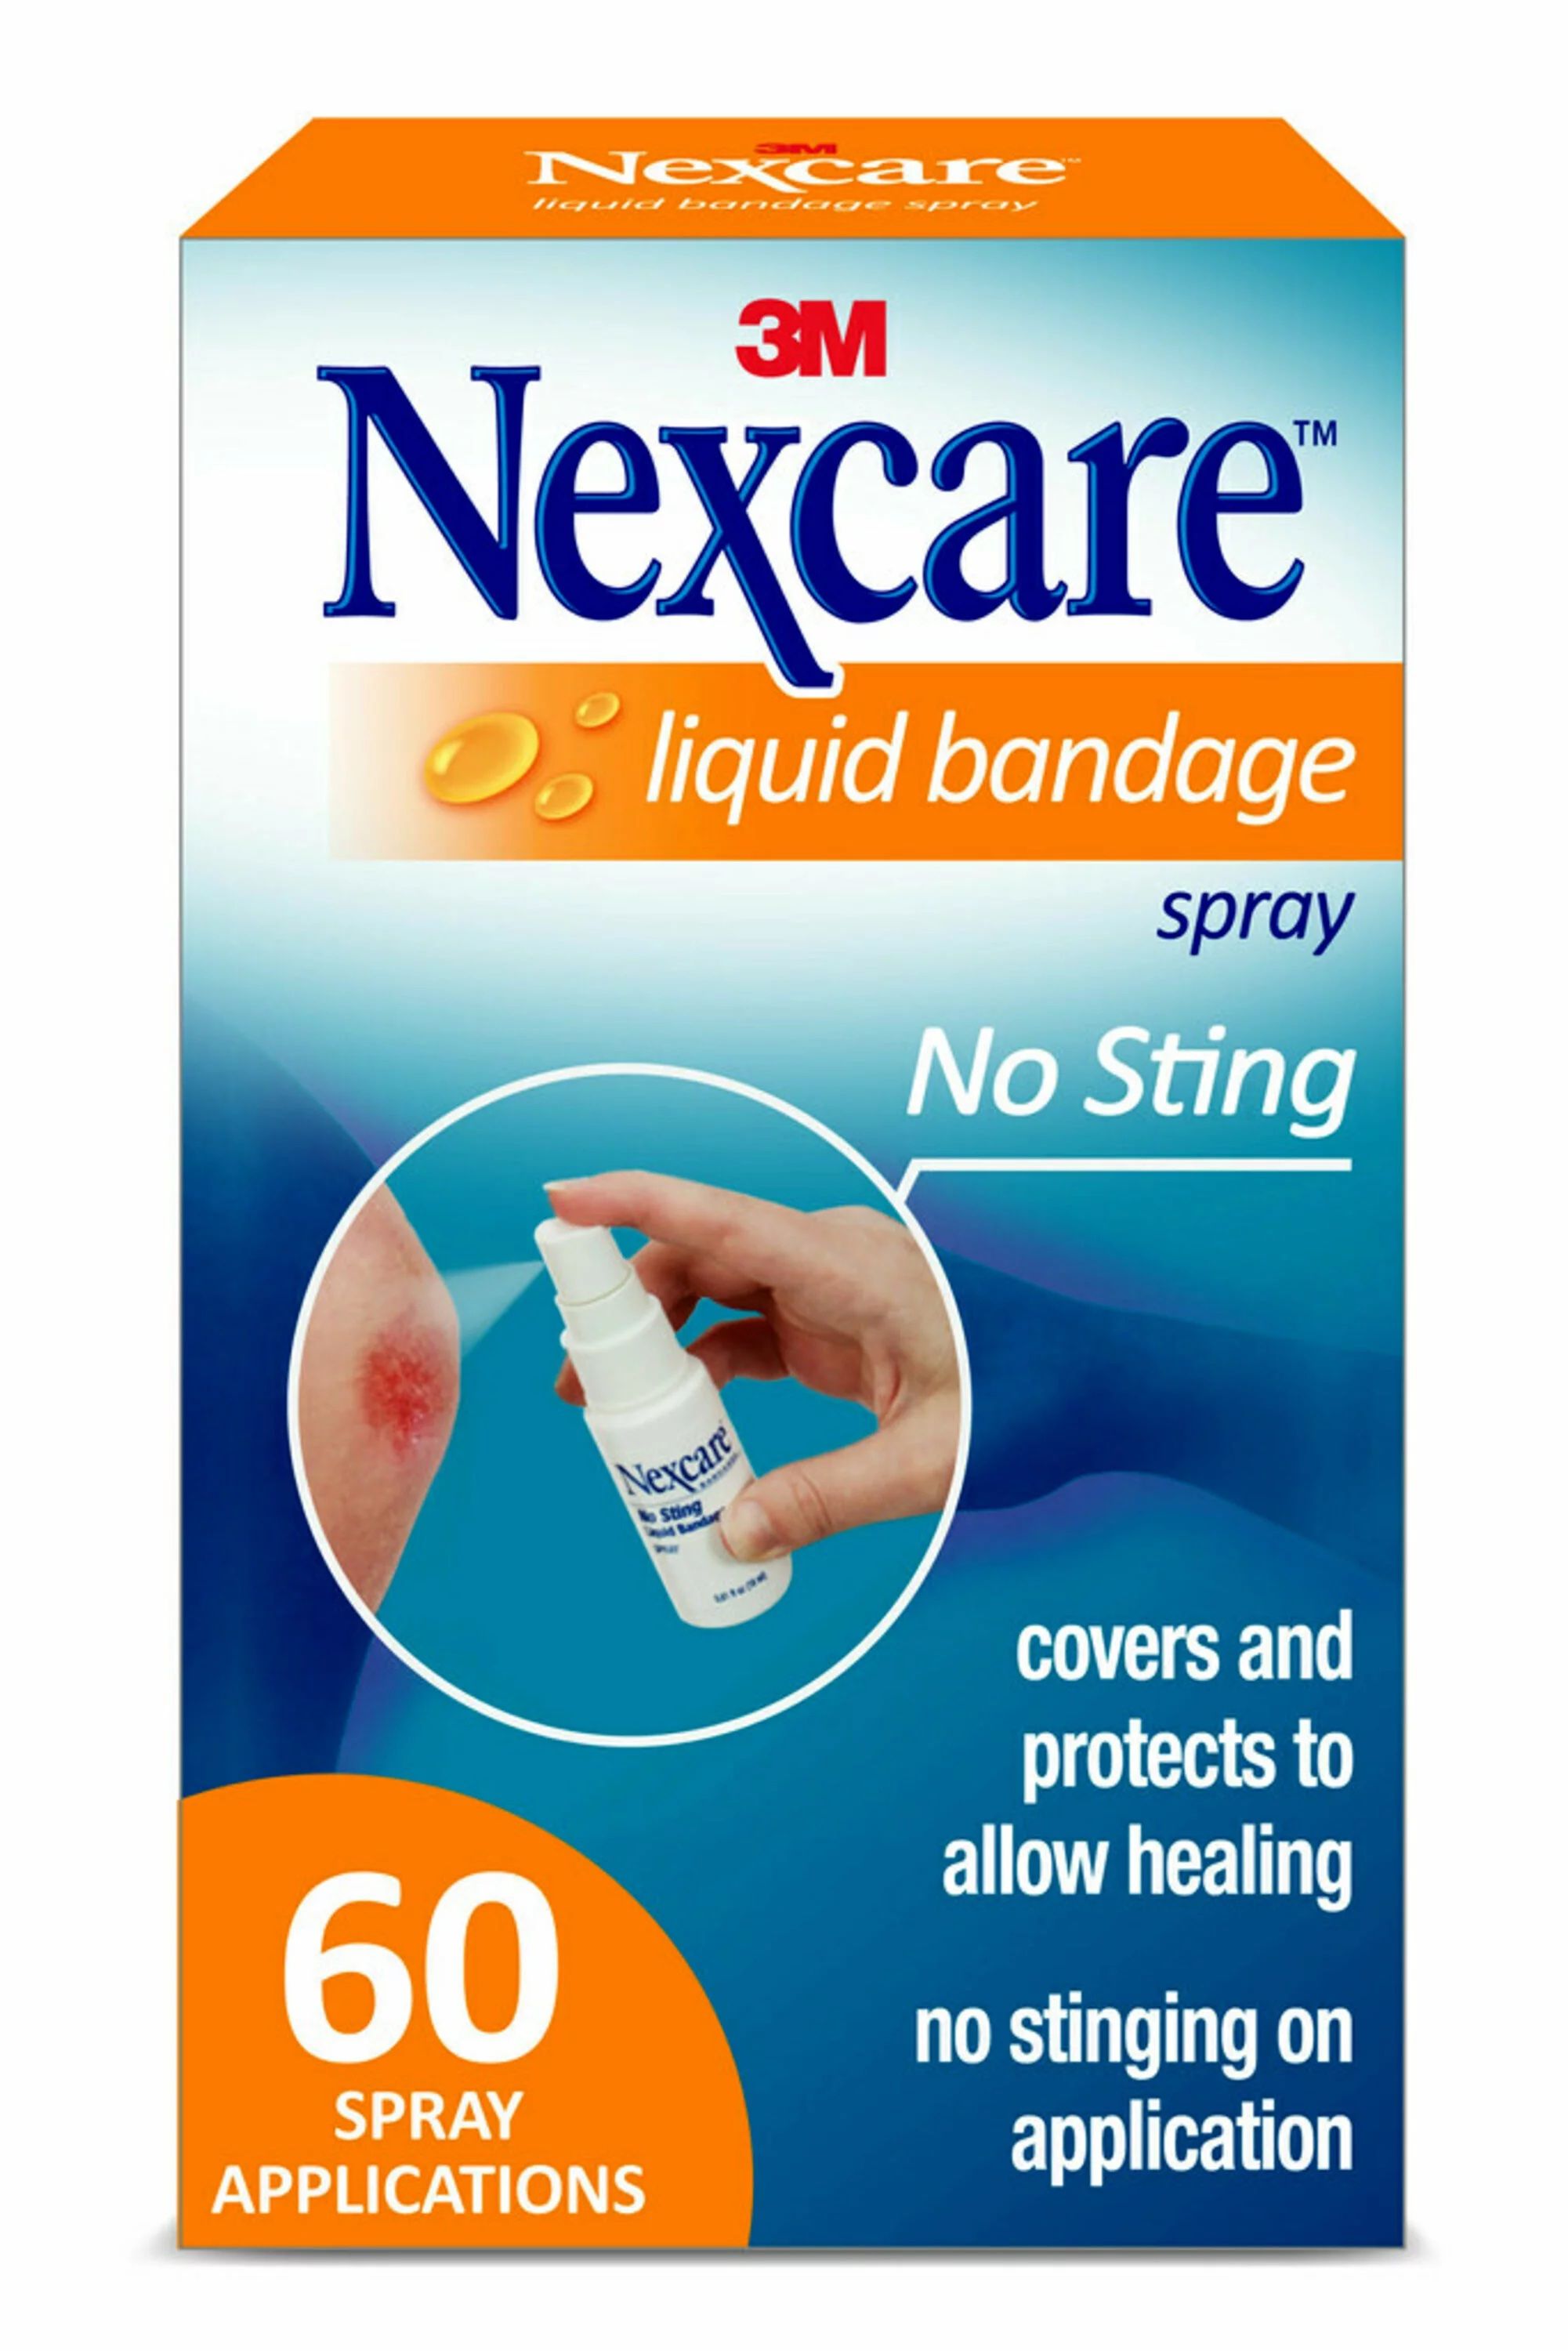 DISCNexcare™ Liquid Bandage Spray, 60 Sprays -  0.61 fl oz